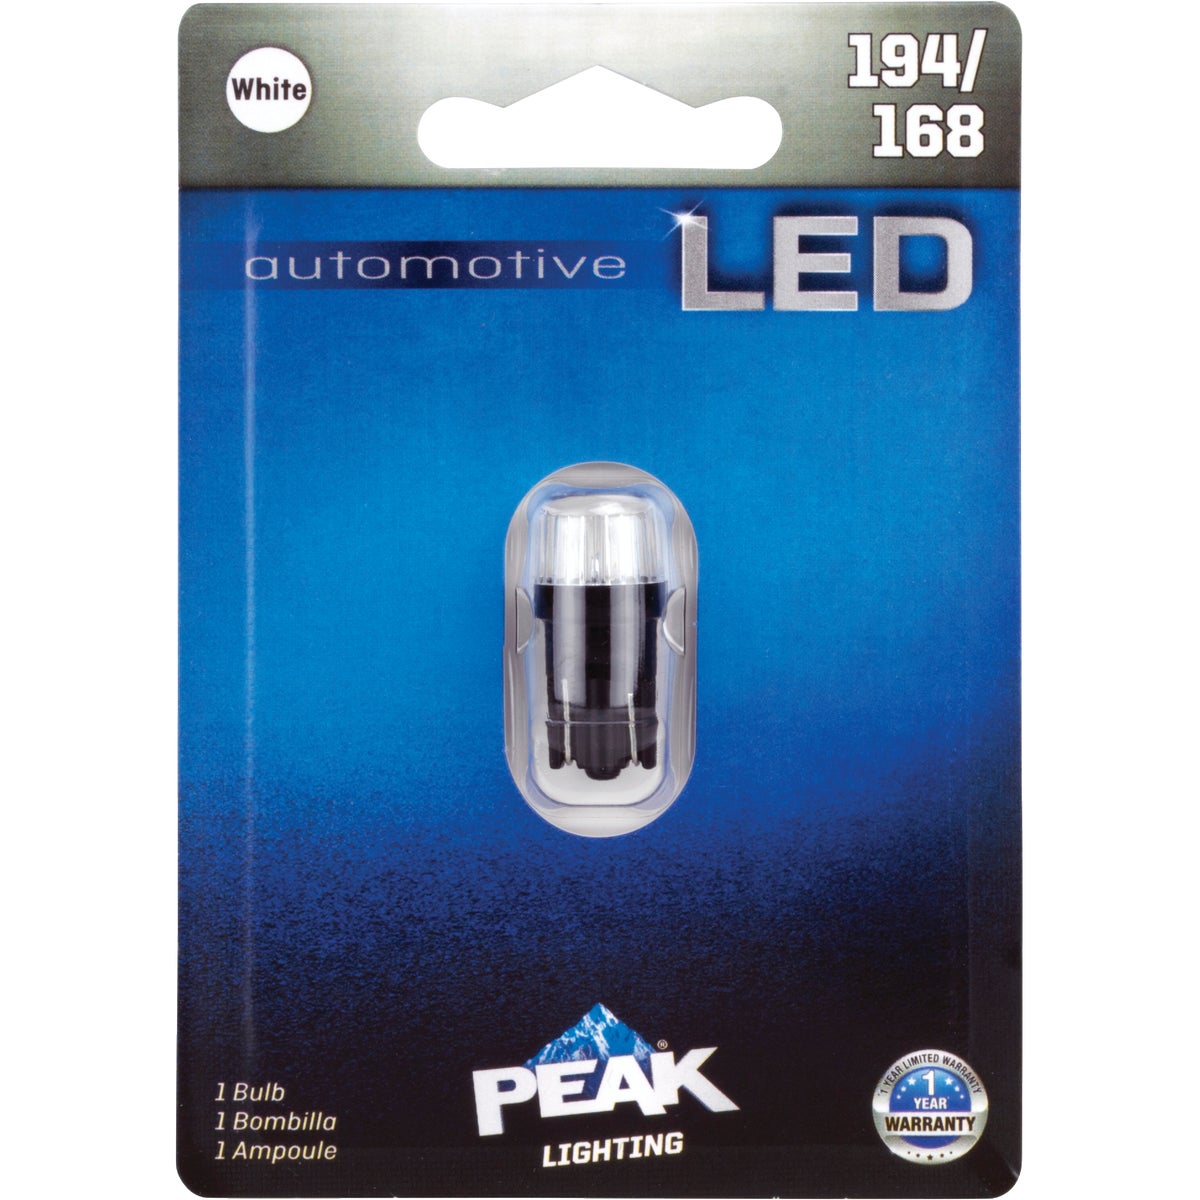 Item 574871, PEAK brand LED (light emitting diode) retrofit bulbs are a direct 